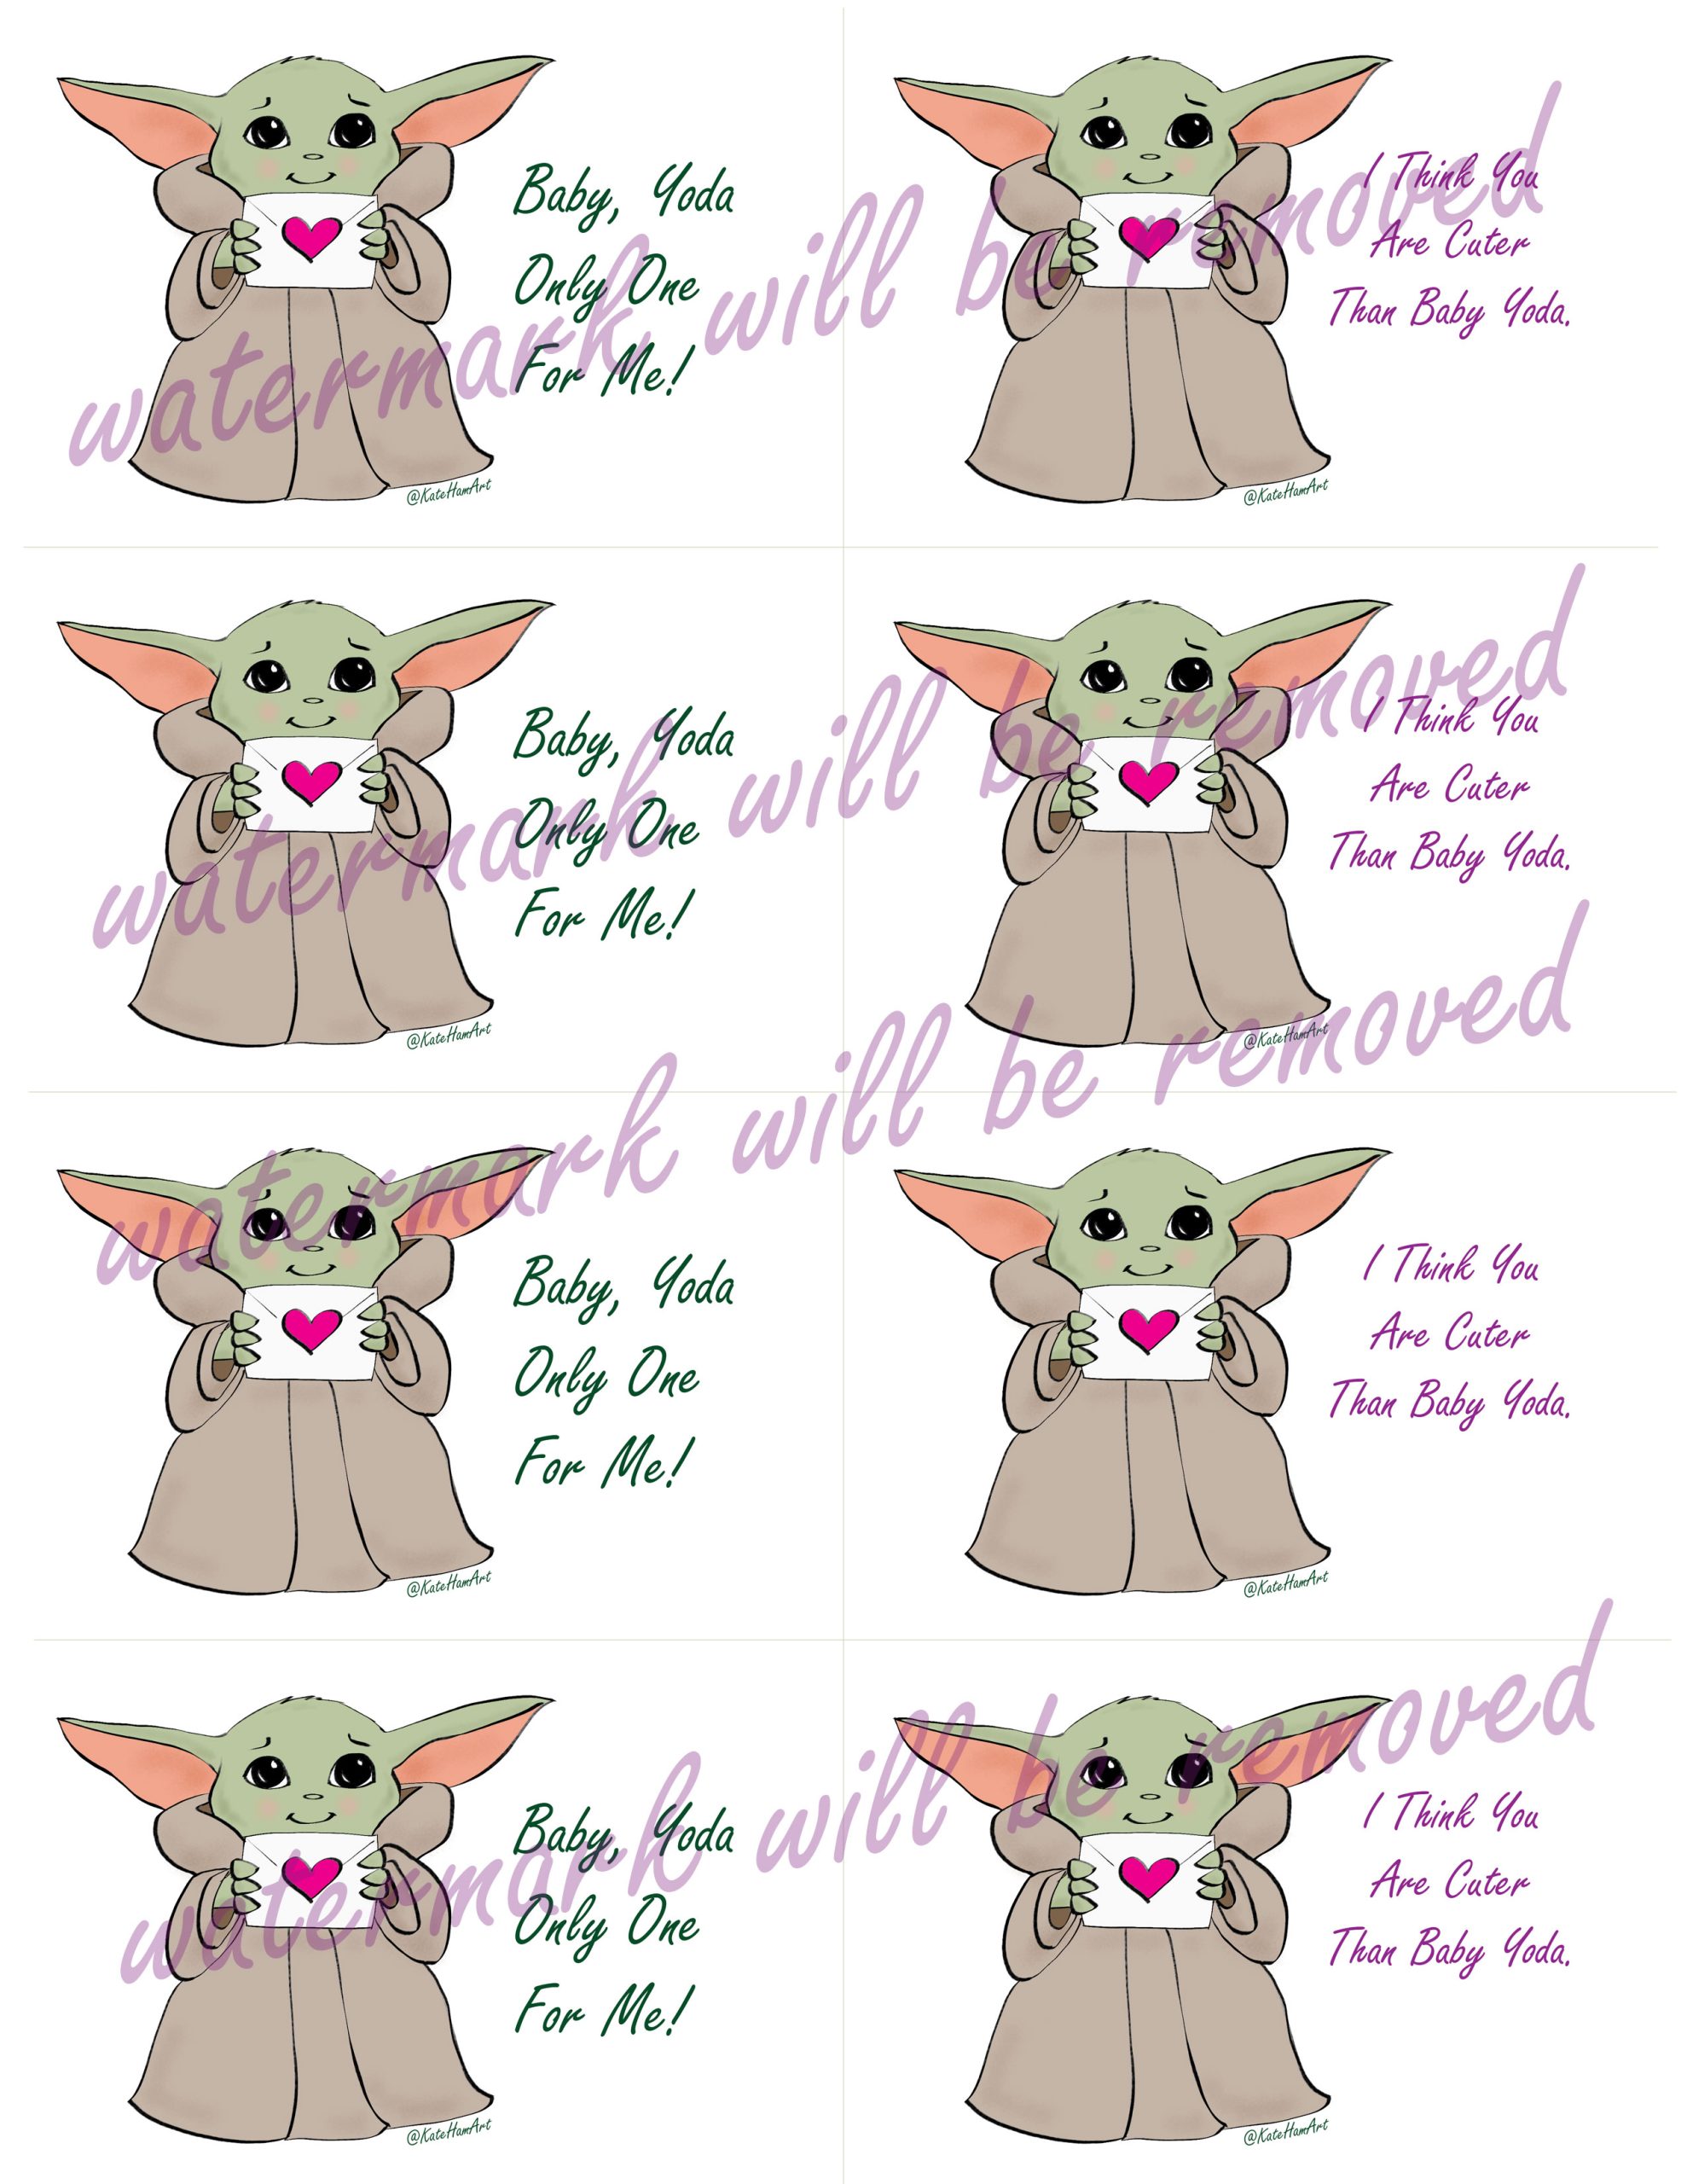 baby yoda cartoon classroom printable valentine's day cards